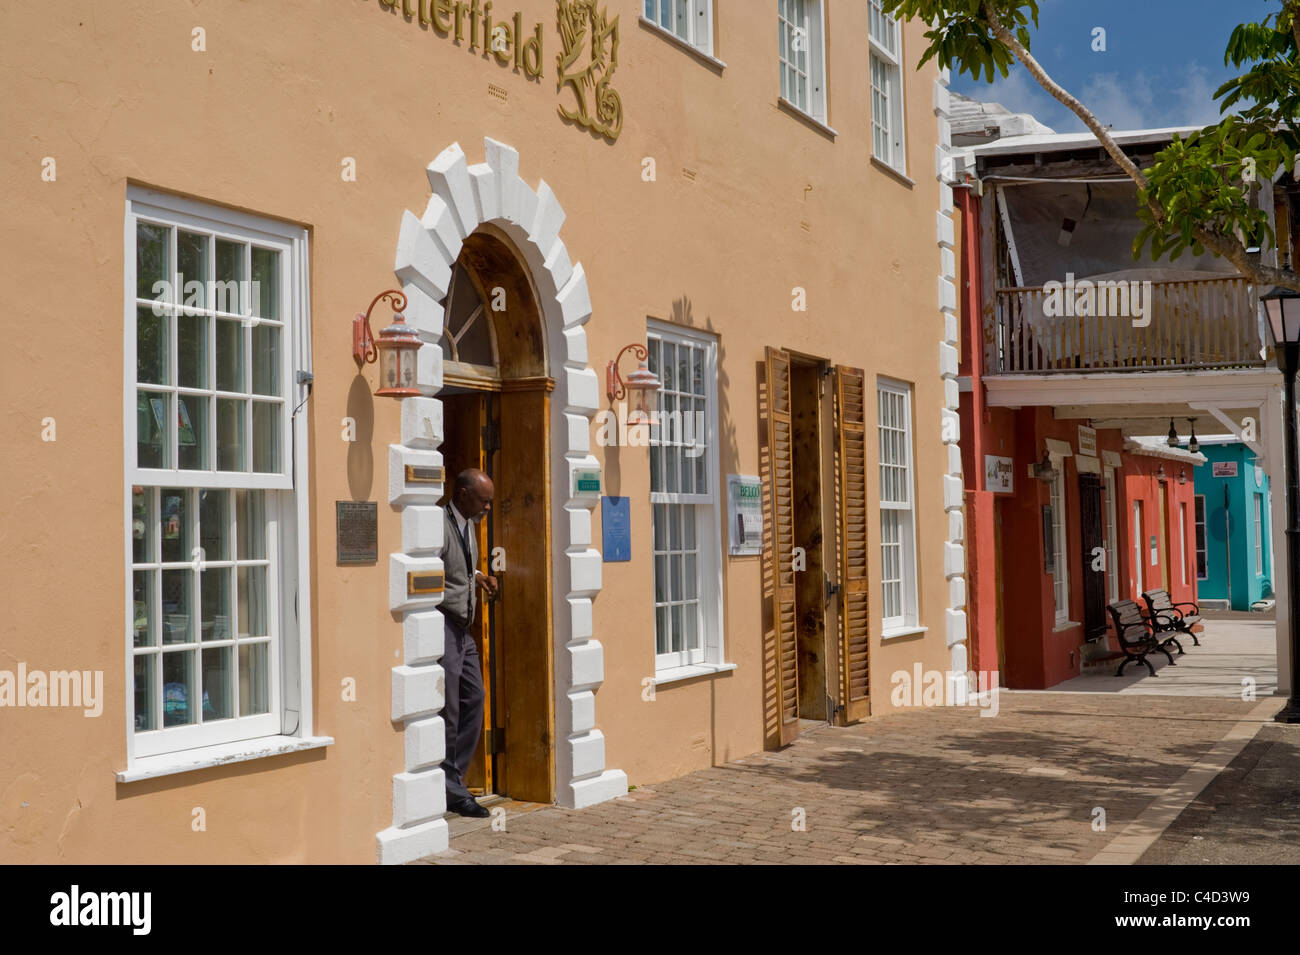 Man peers out from a doorway, St. George, Bermuda. Stock Photo